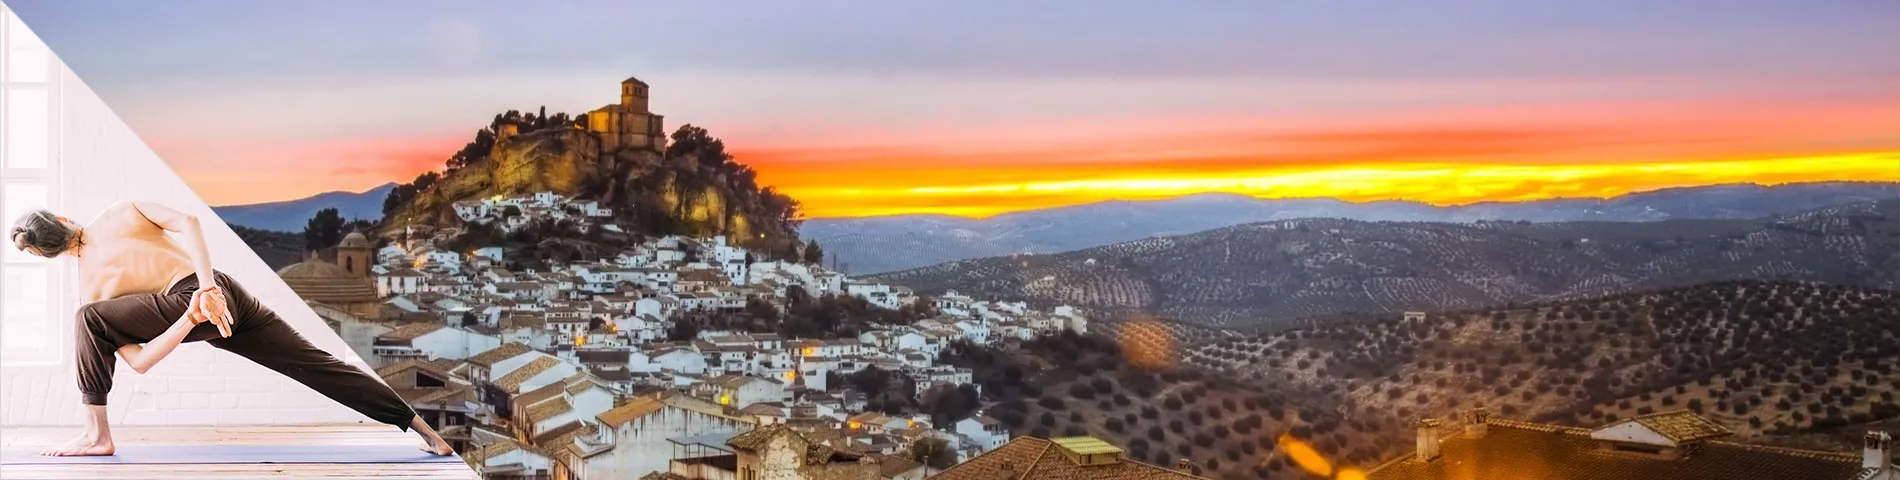 Granada - Spanyol  & jóga